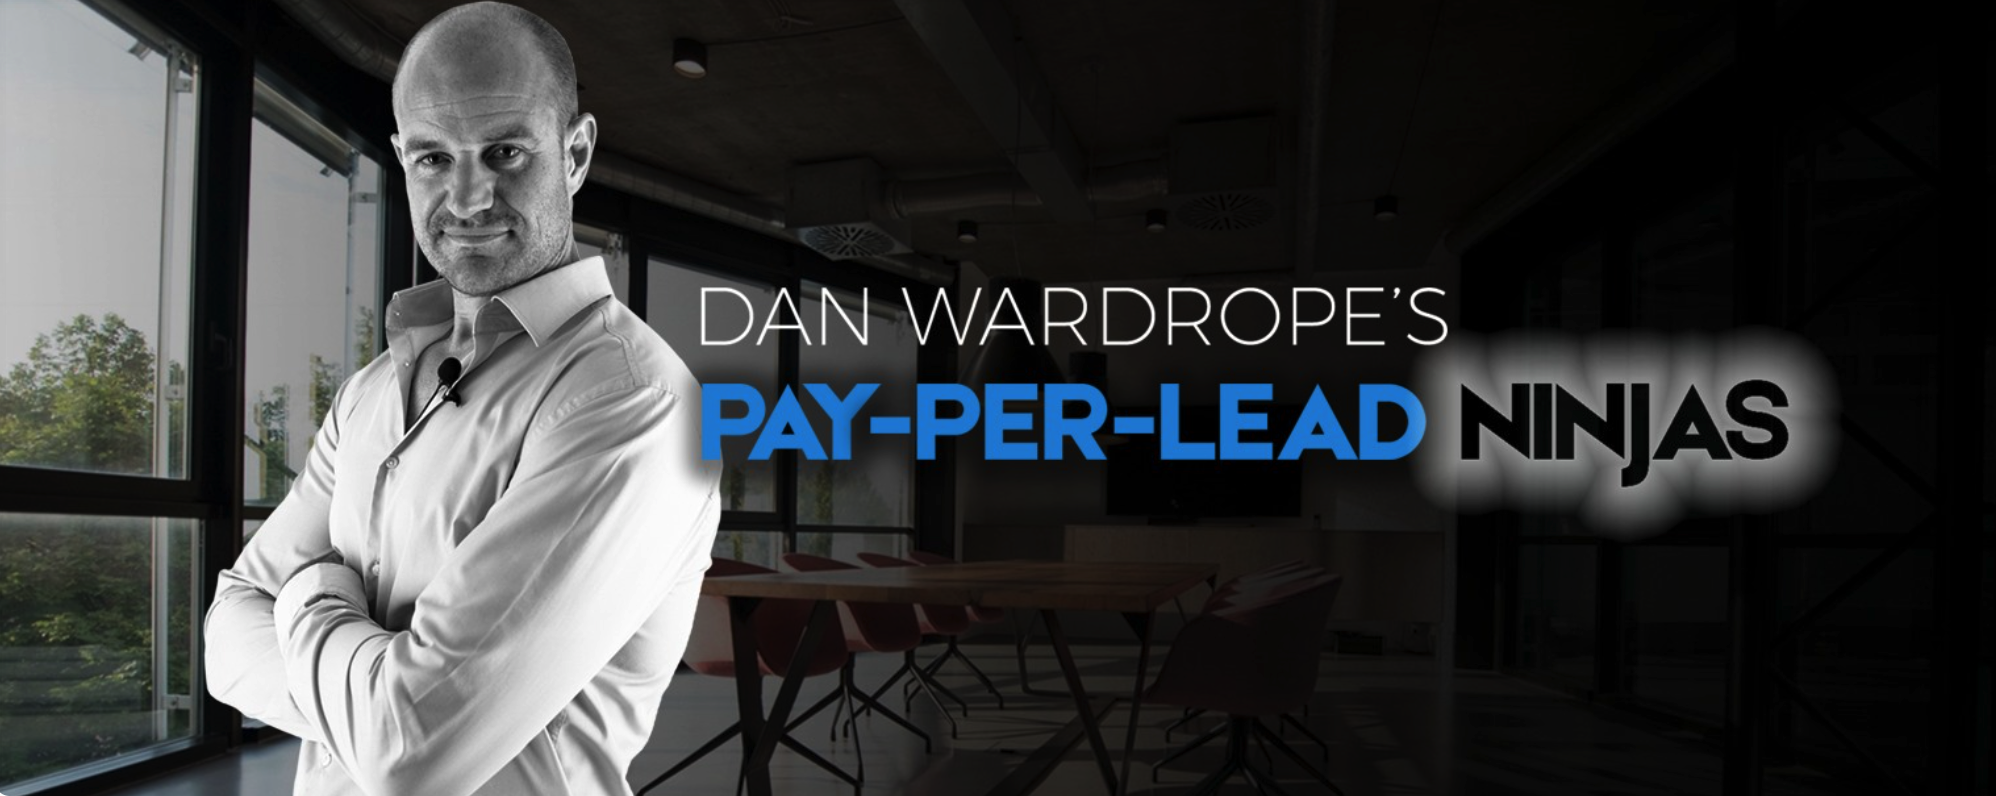 Dan Wardrop pay per lead ninjas facebook group